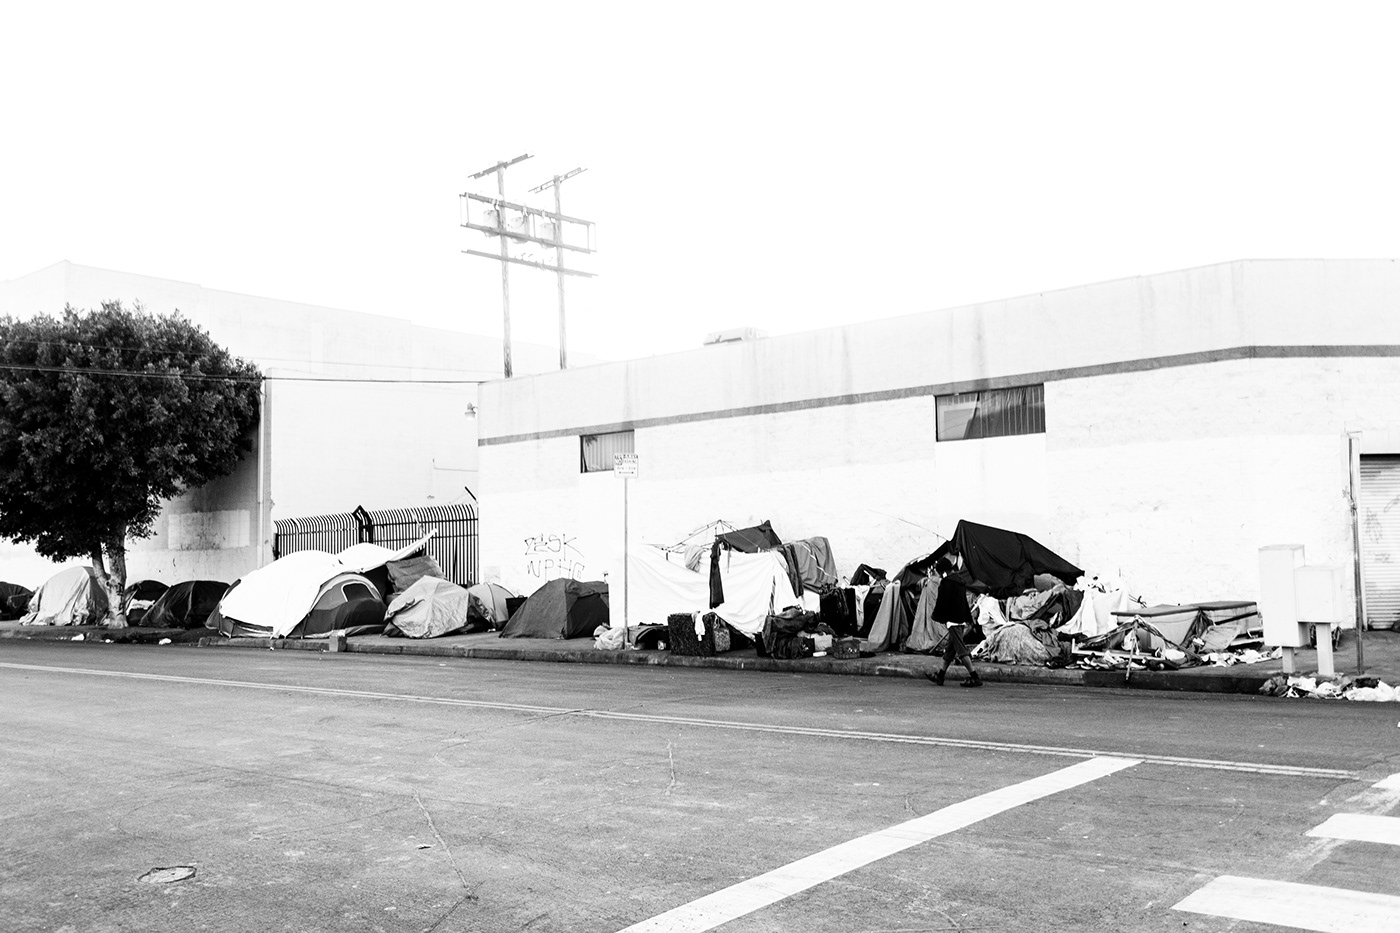 hope hopeless homeless Los Angeles Photography  street photography Poverty awareness